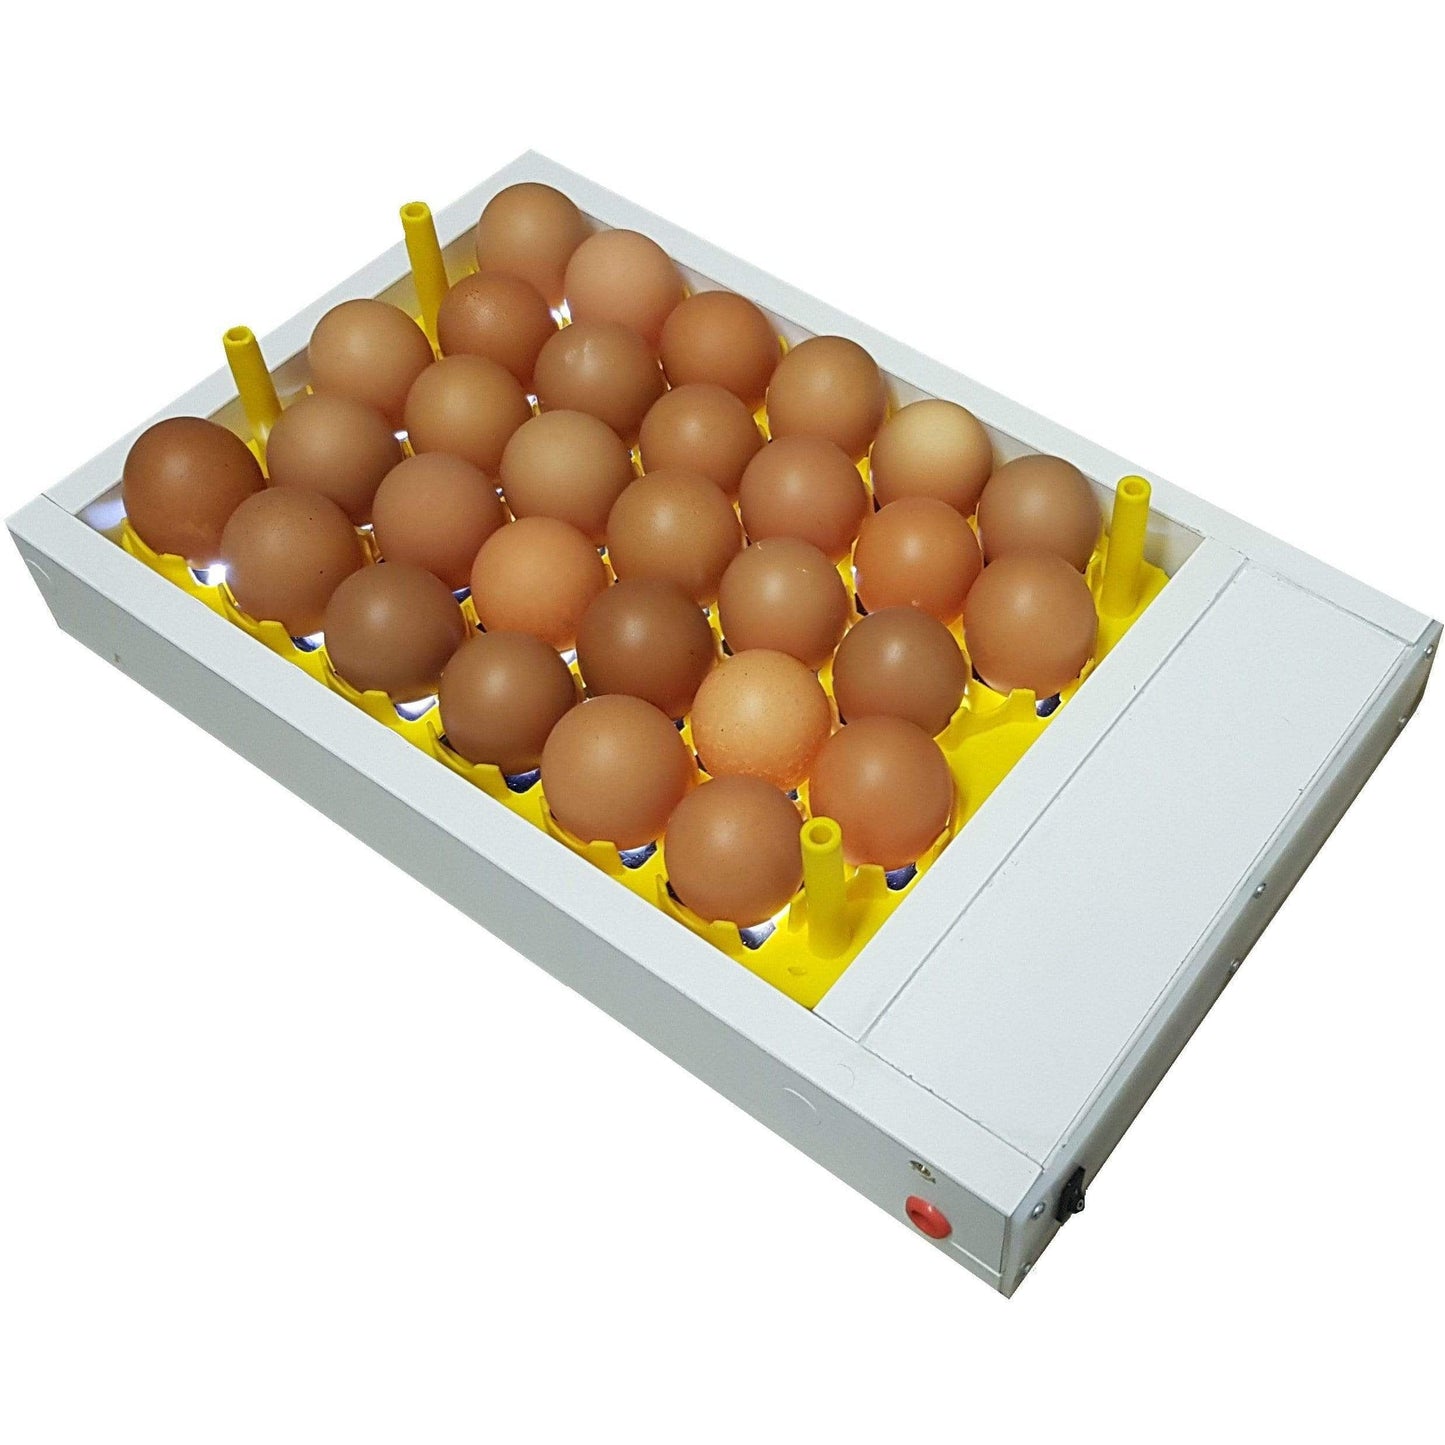 Egg Fertility Tester (Egg Candler) for 30 Chicken Eggs - SureView - Surehatch Incubators